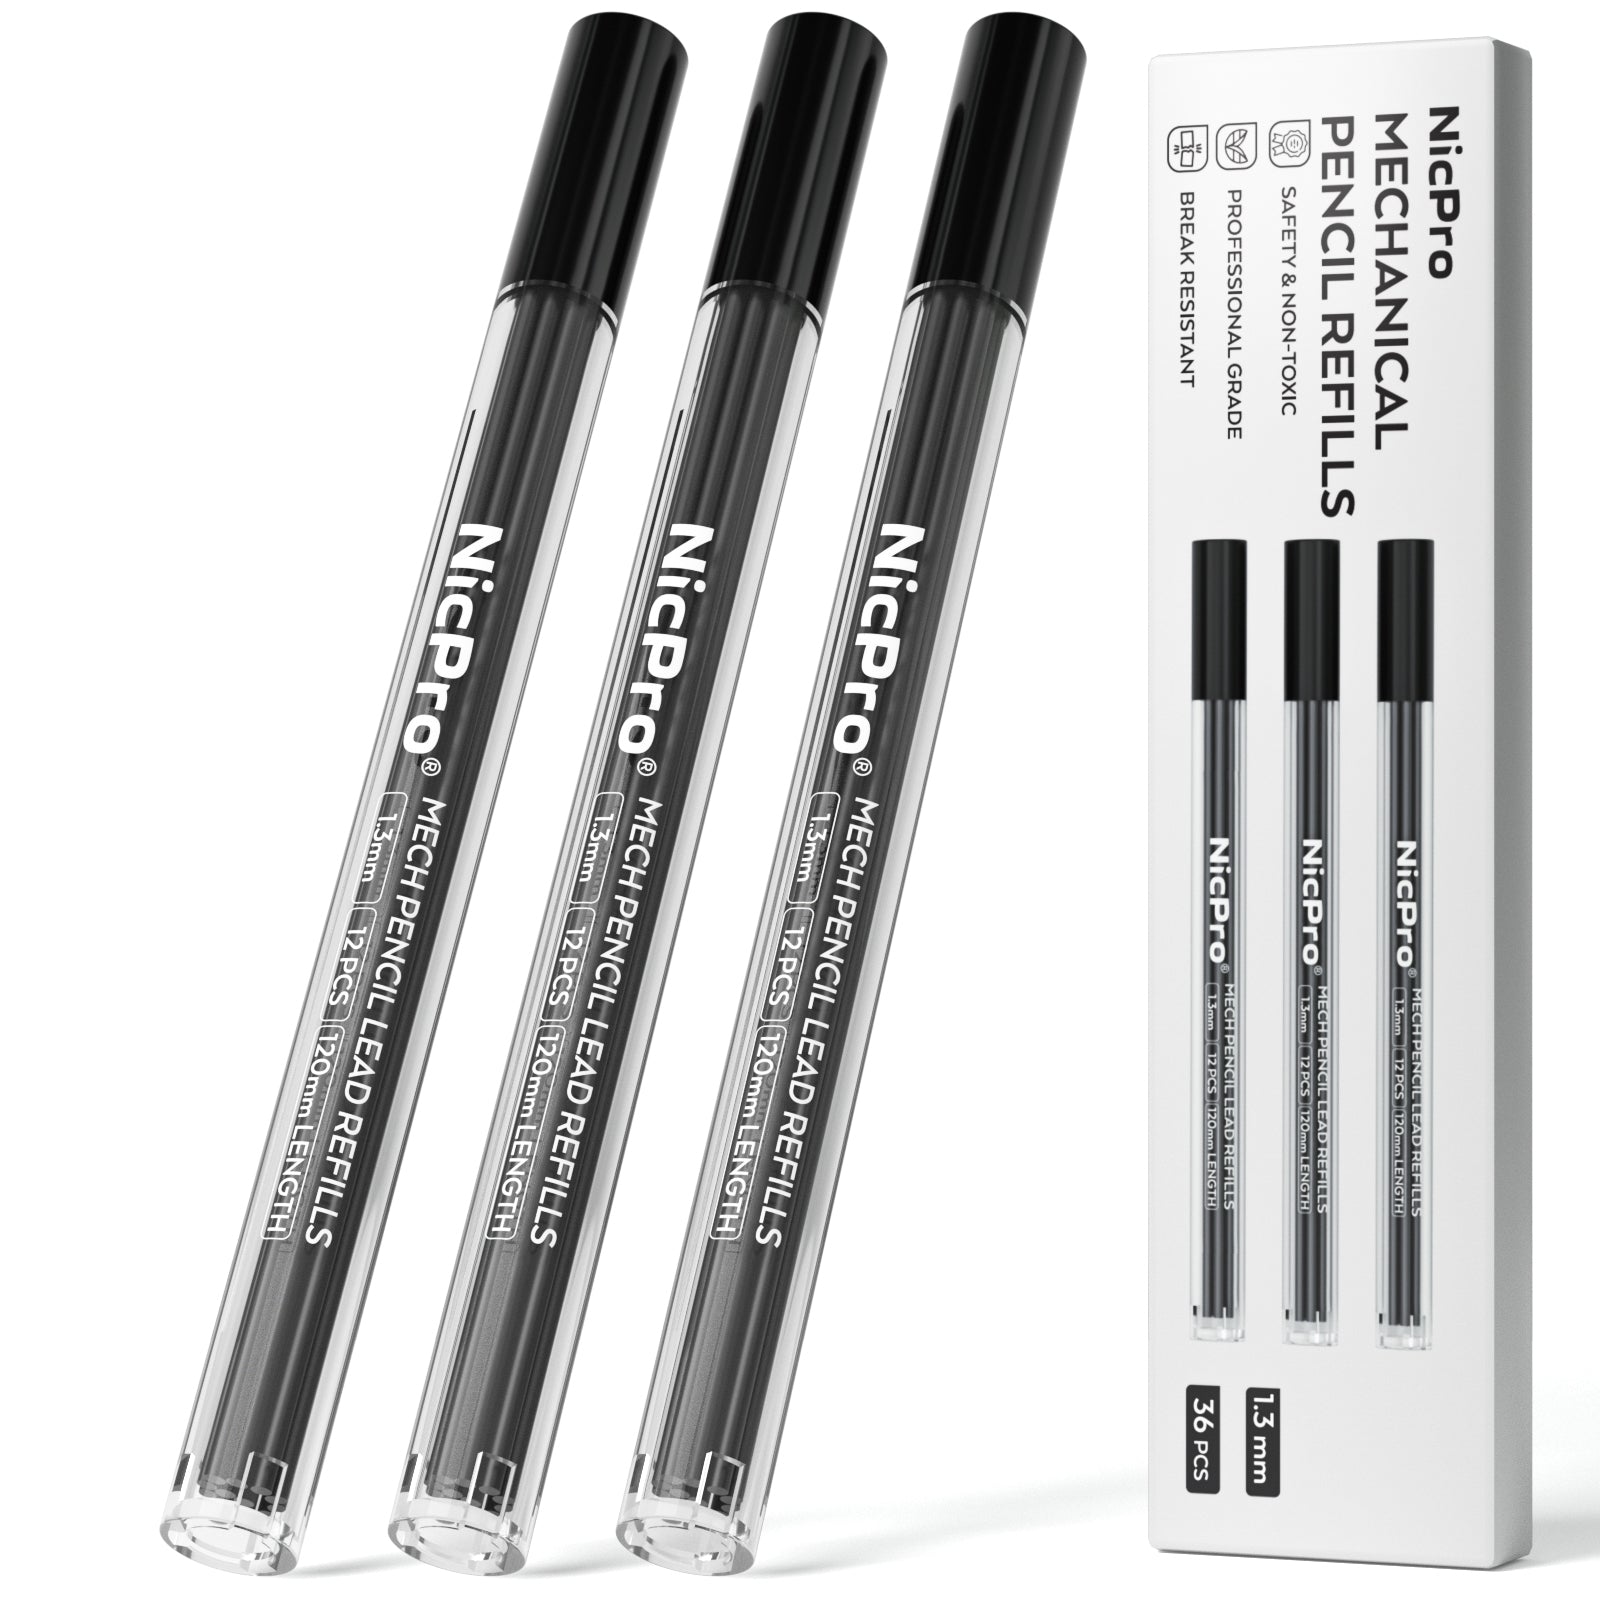 Nicpro 36 PCS 1.3 mm Lead Refills, Break Resistant Weatherproof Mechanical Pencil Refills 1.3 mm (2B), 12 Pack Per Tube, Lead Length 120mm, 3 Tubes- Graphite Lead Black